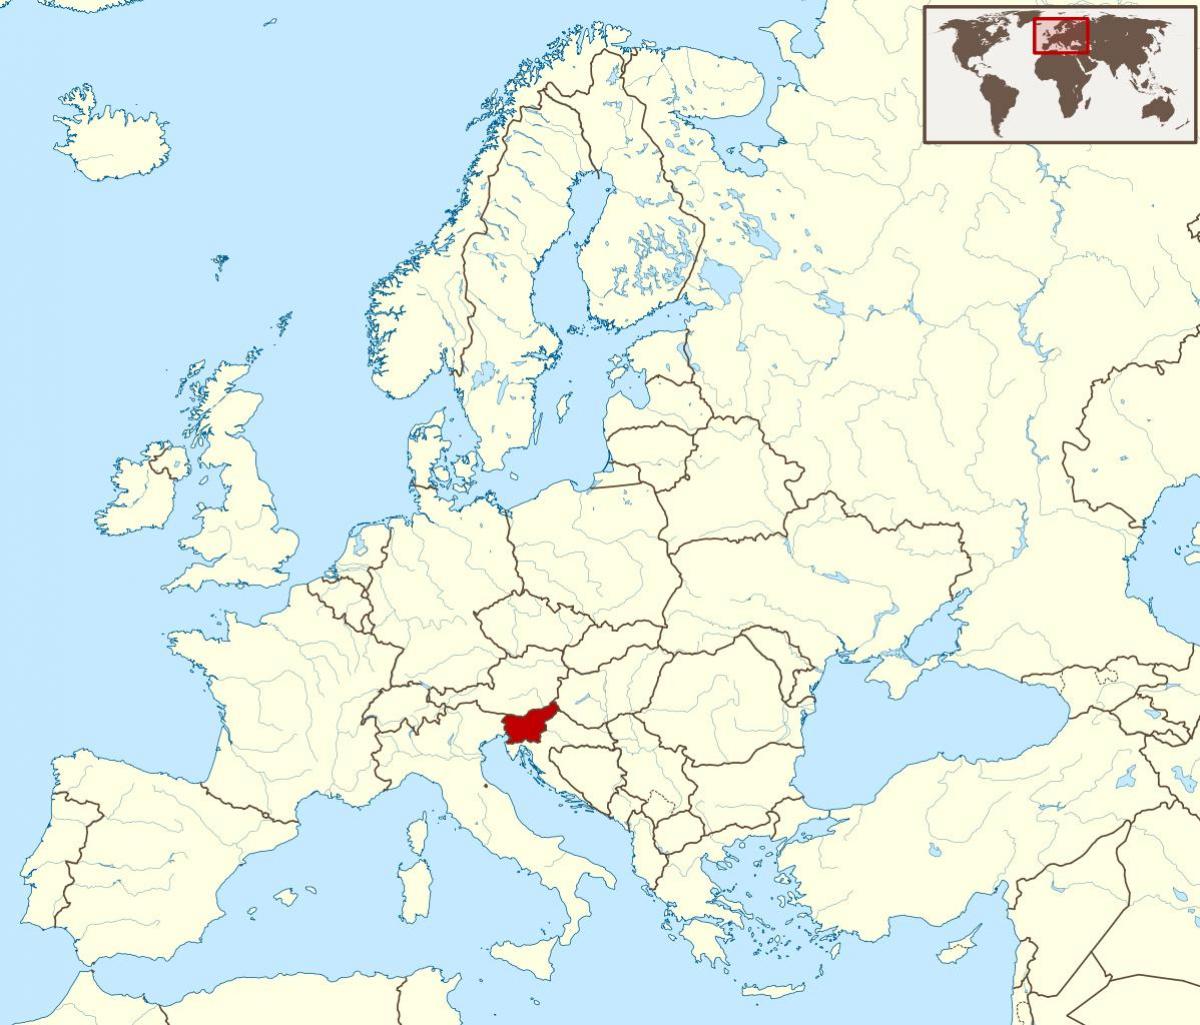 slovenie carte du monde